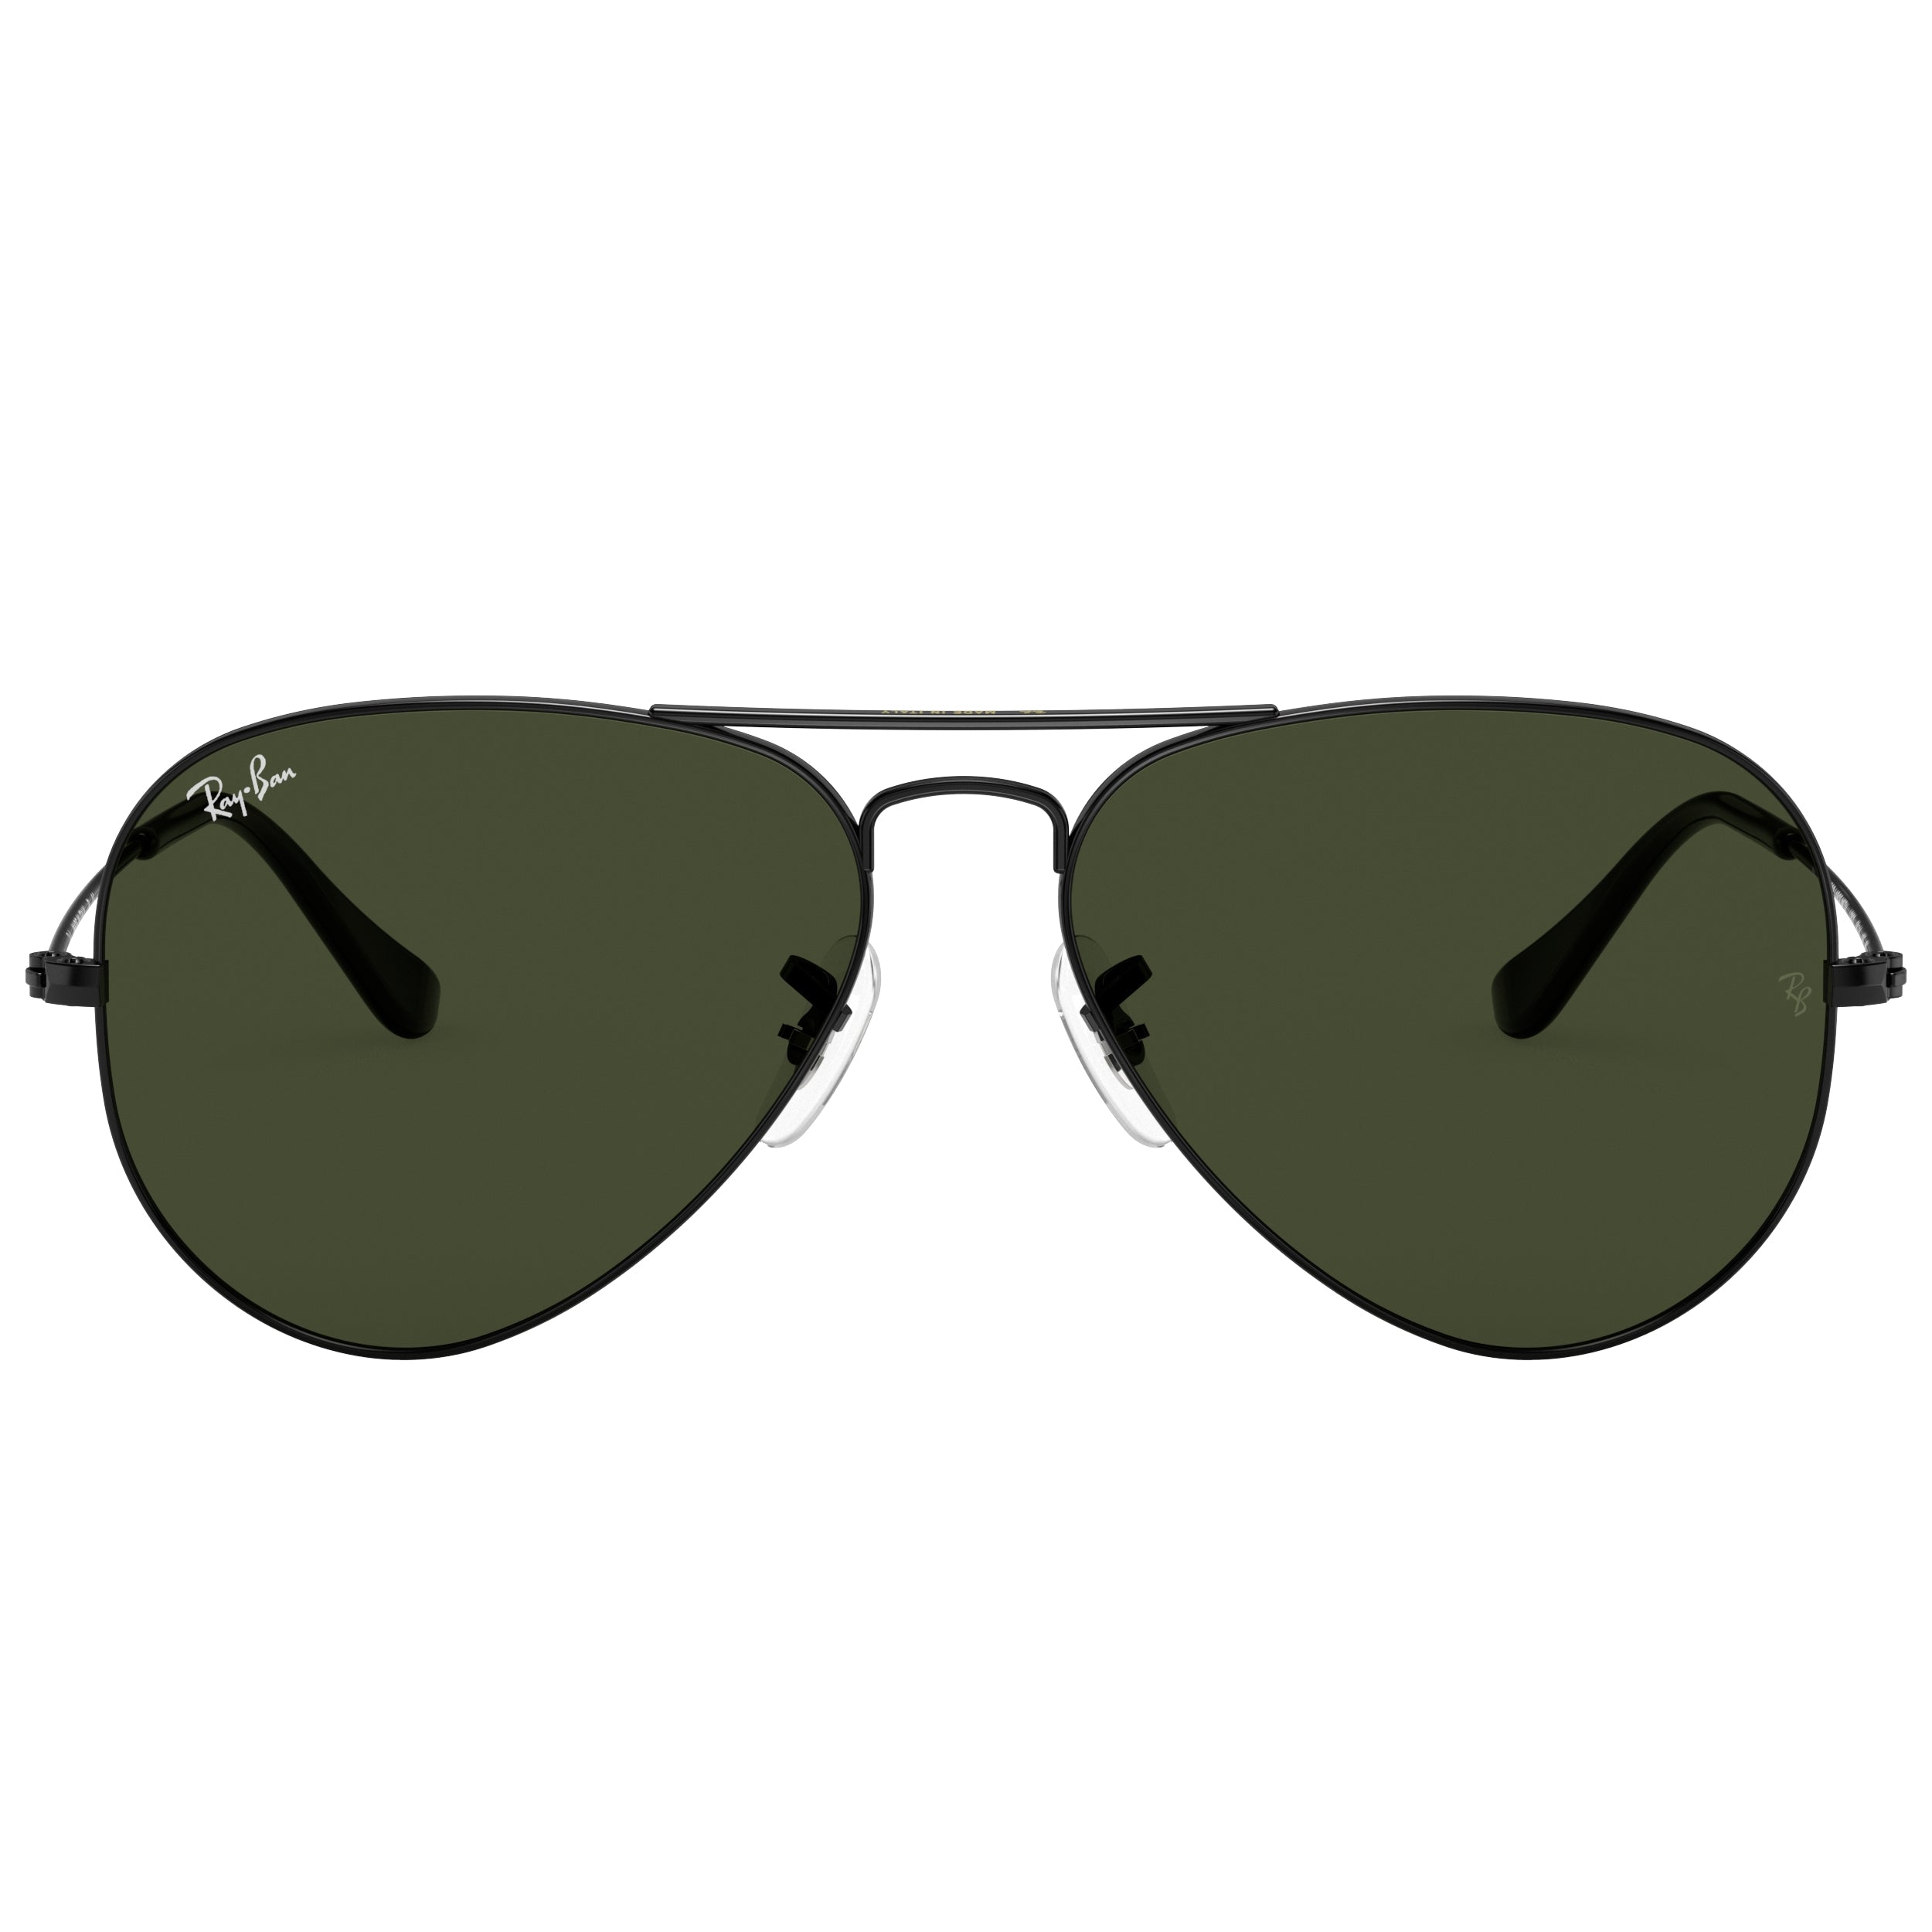 Ray-Ban Aviator Green Classic G-15 Classic Aviator/Pilot Men's Sunglasses RB3025 L2823 58